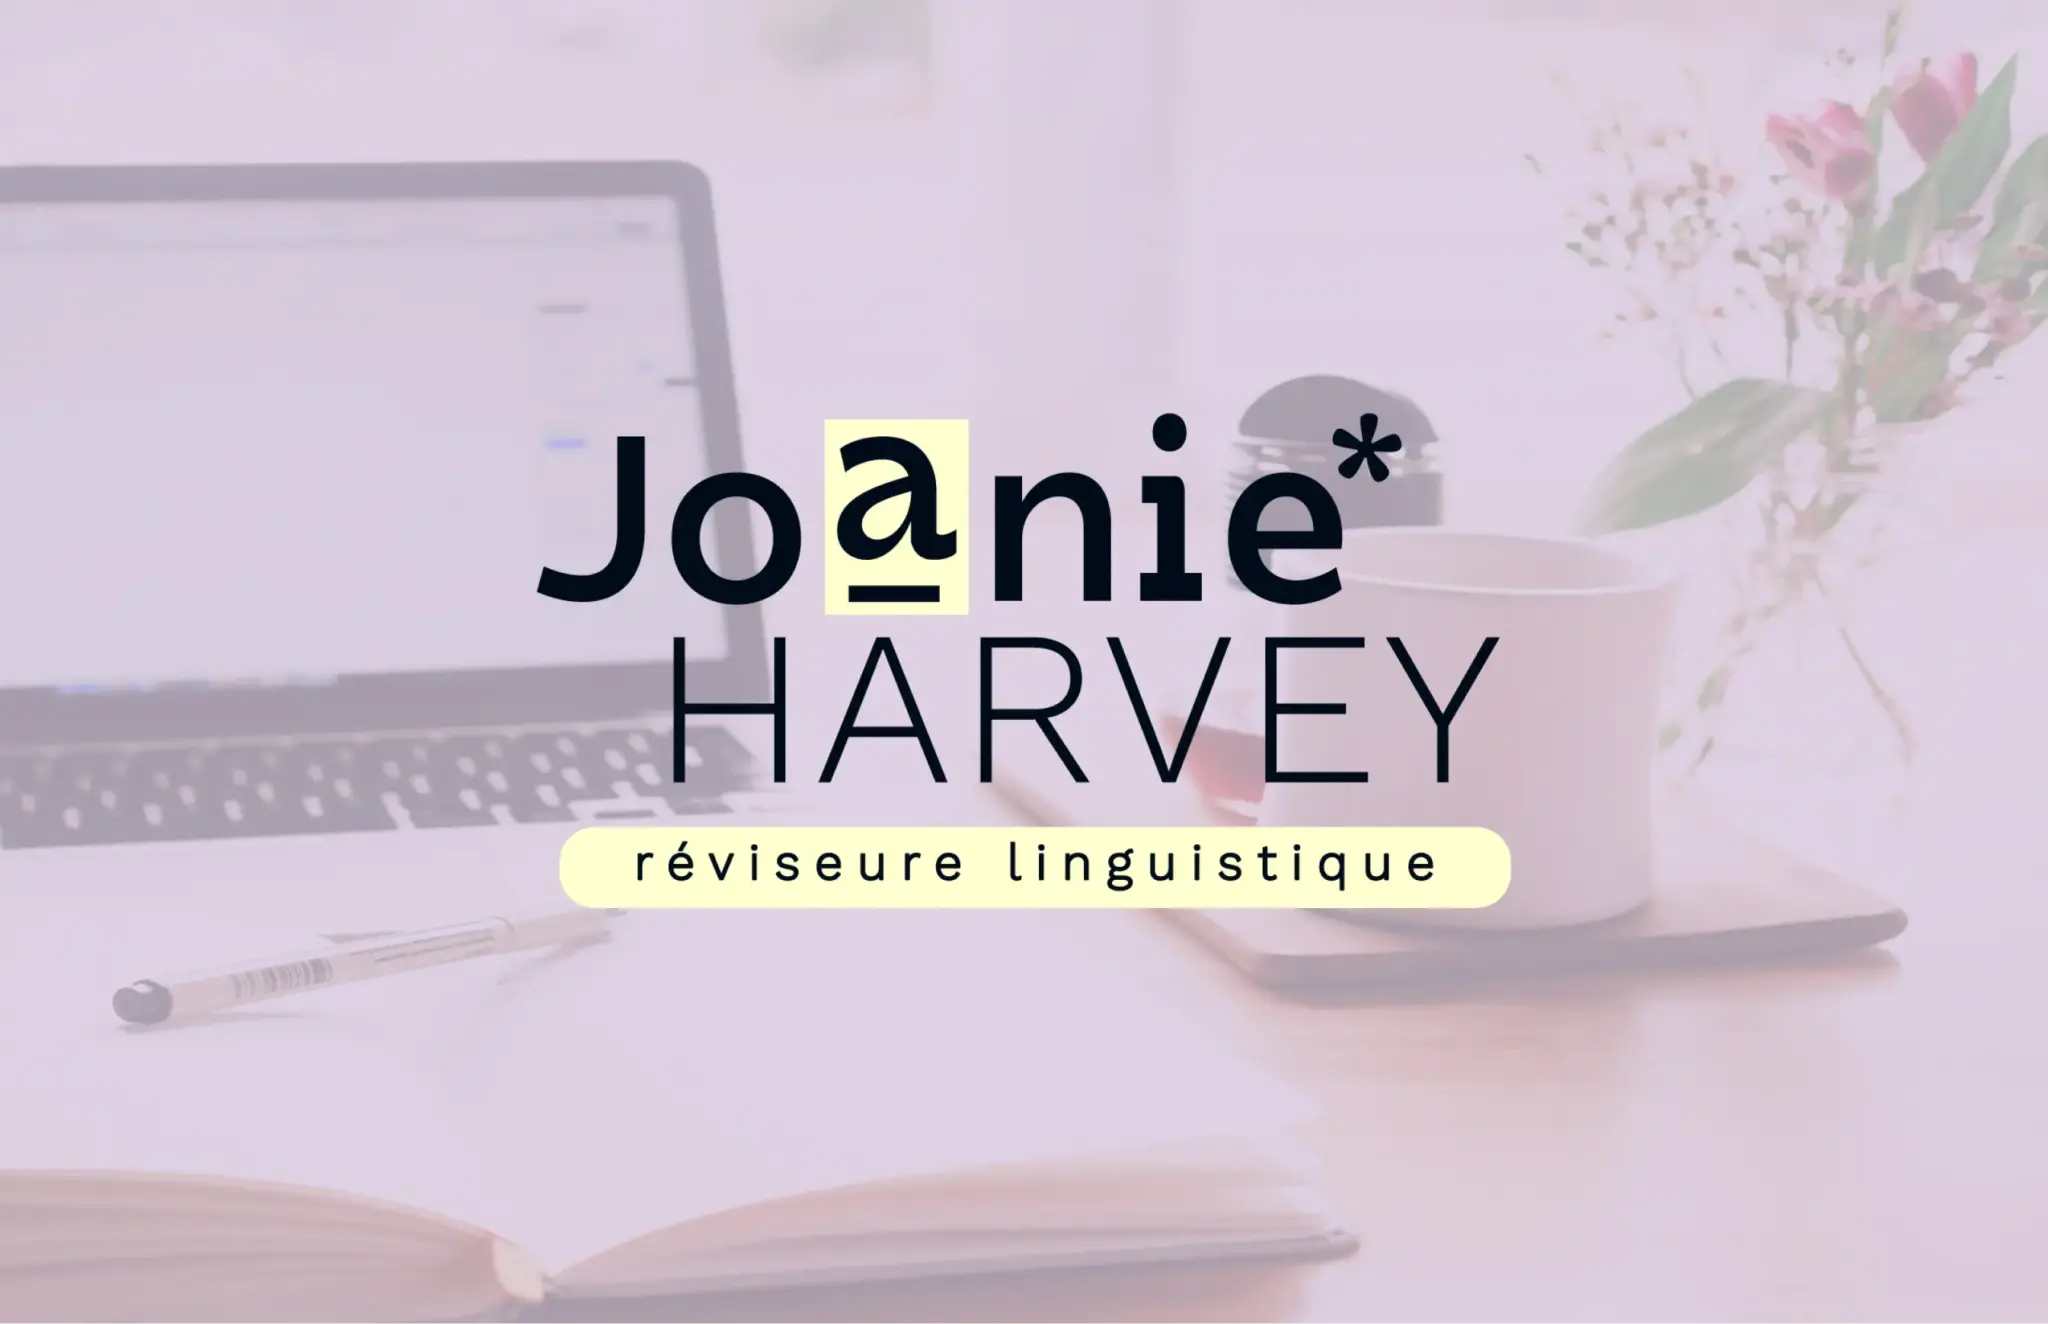 moose agence marketing portfolio joanie harvey reviseure linguistique principal